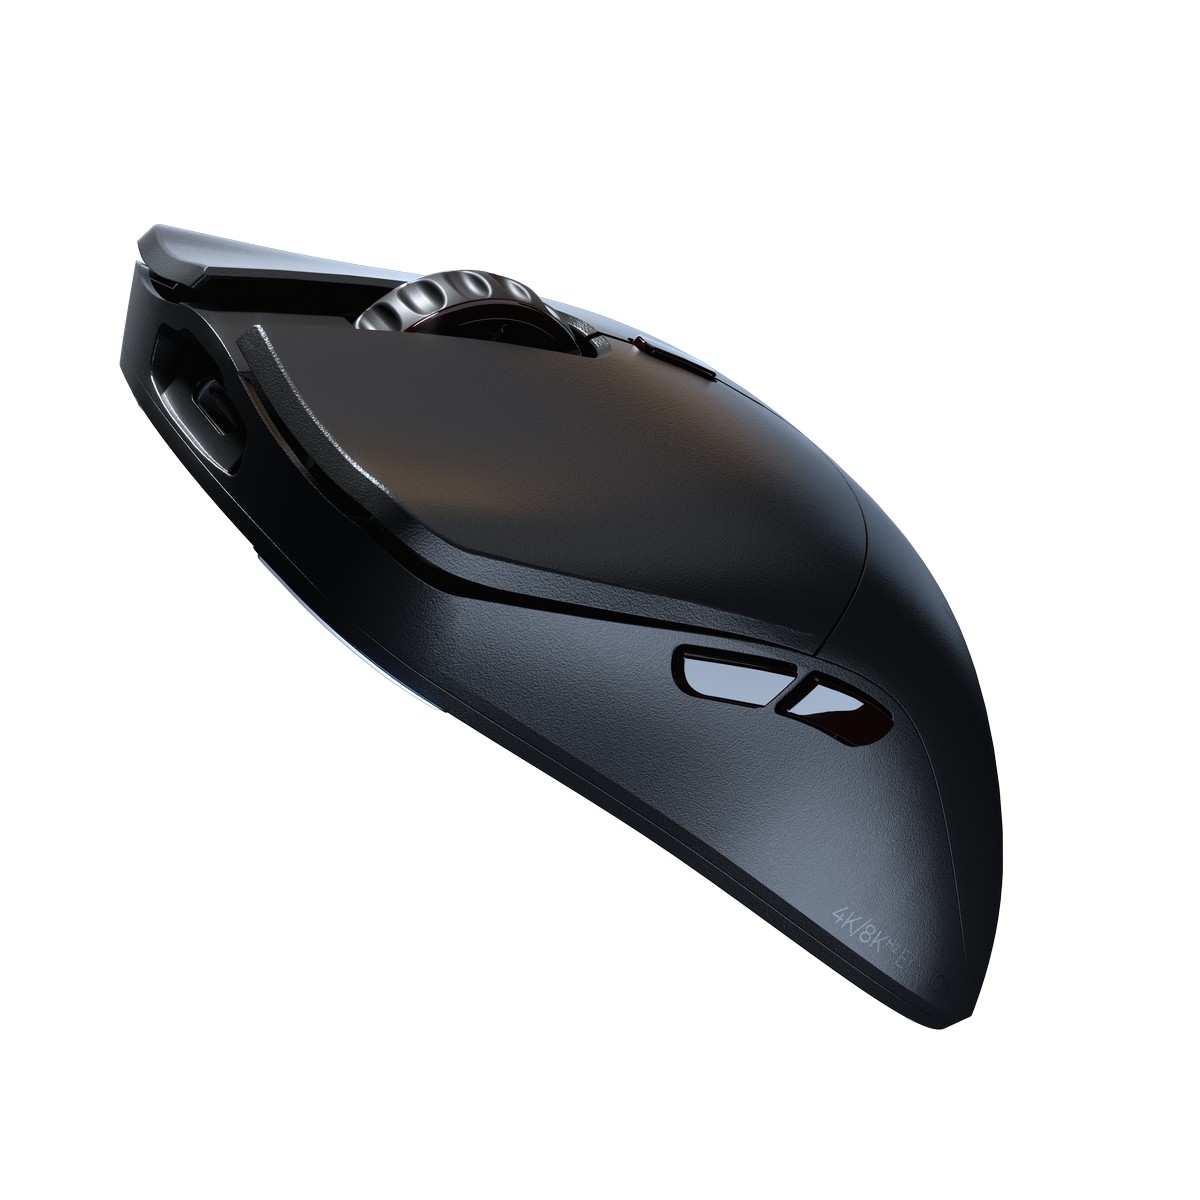 Glorious - Glorious Model O 2 PRO 4K/8K Polling Wireless RGB Gaming Mouse - Black